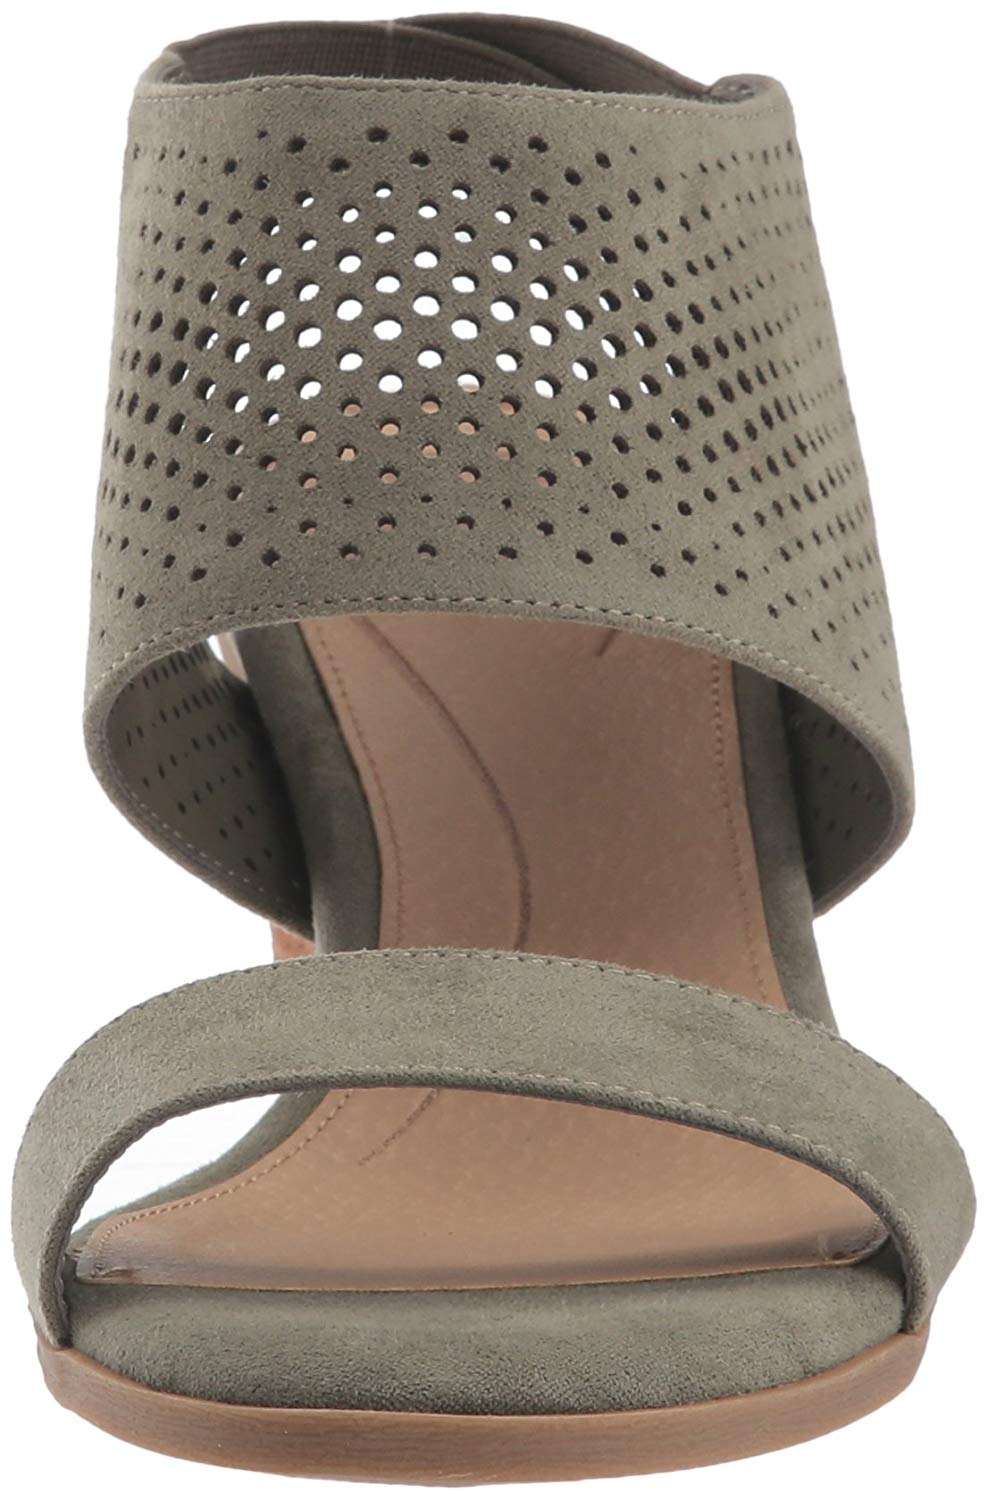 Dr. Scholl's Shoes Women's Jasmin Sandal, Green Microfiber, Size 11.0 ...